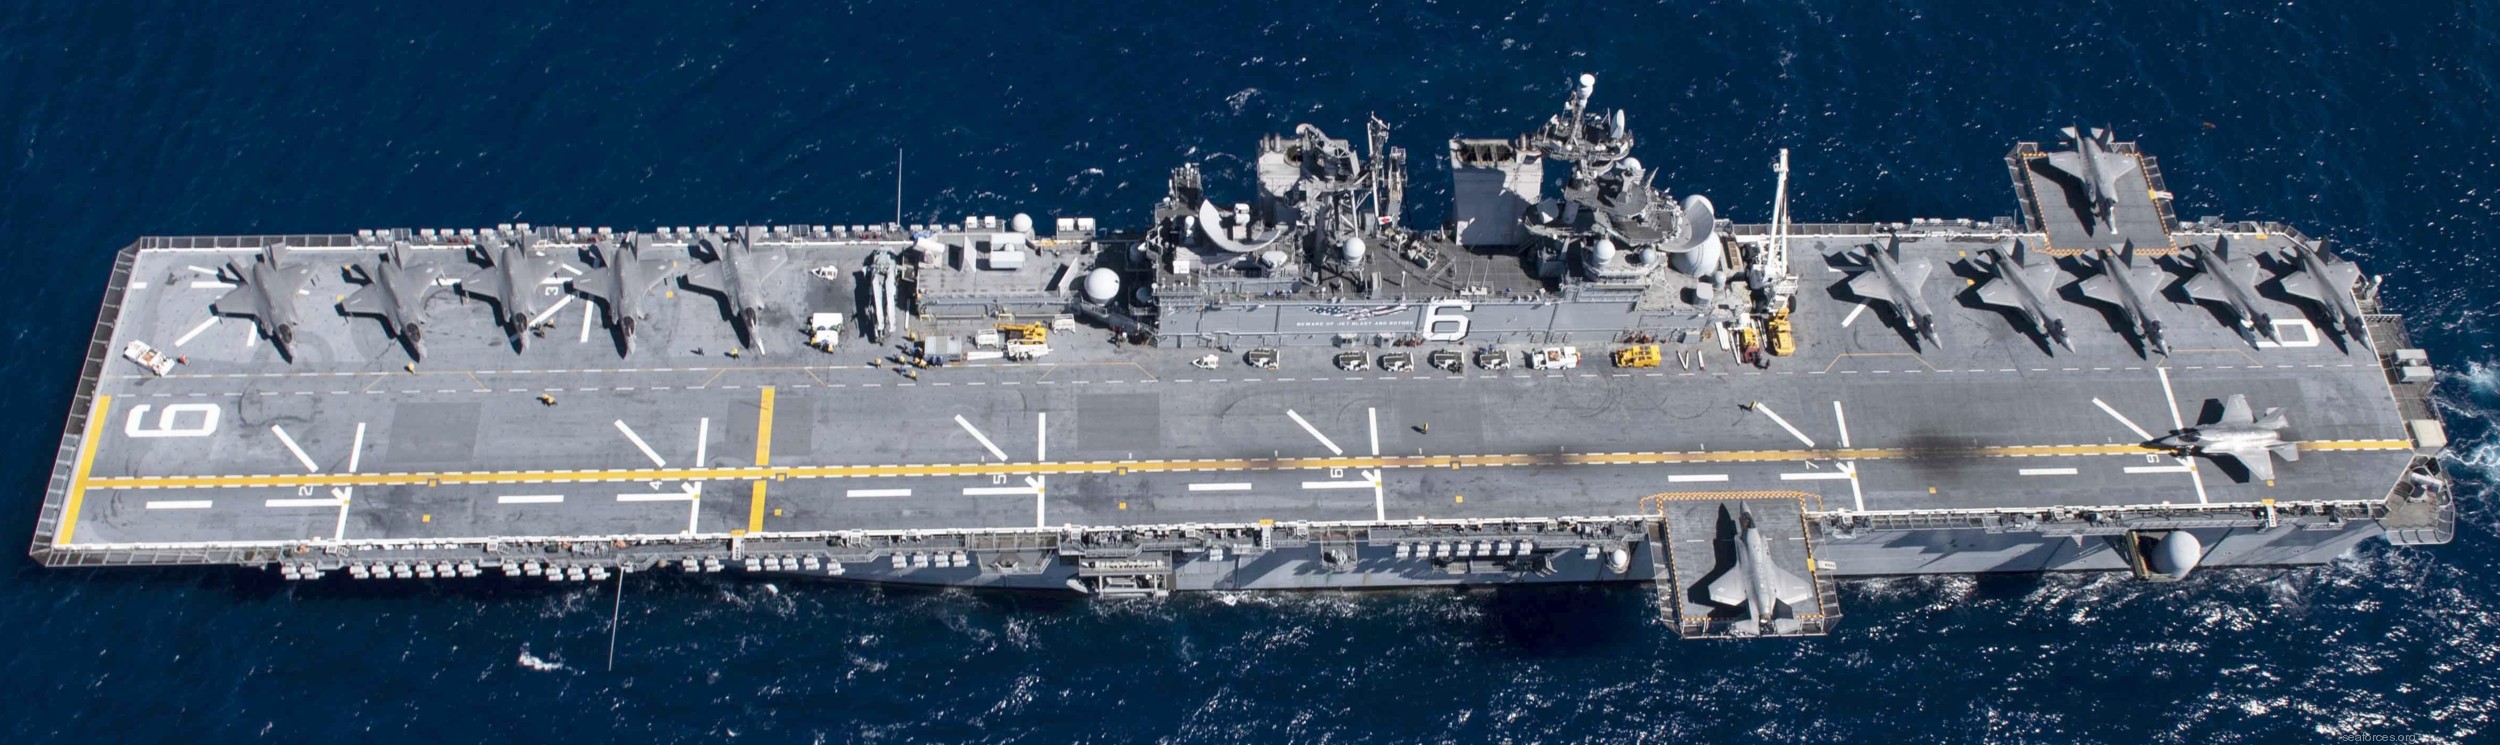 lha-6 uss america amphibious assault ship landing us navy marines 04